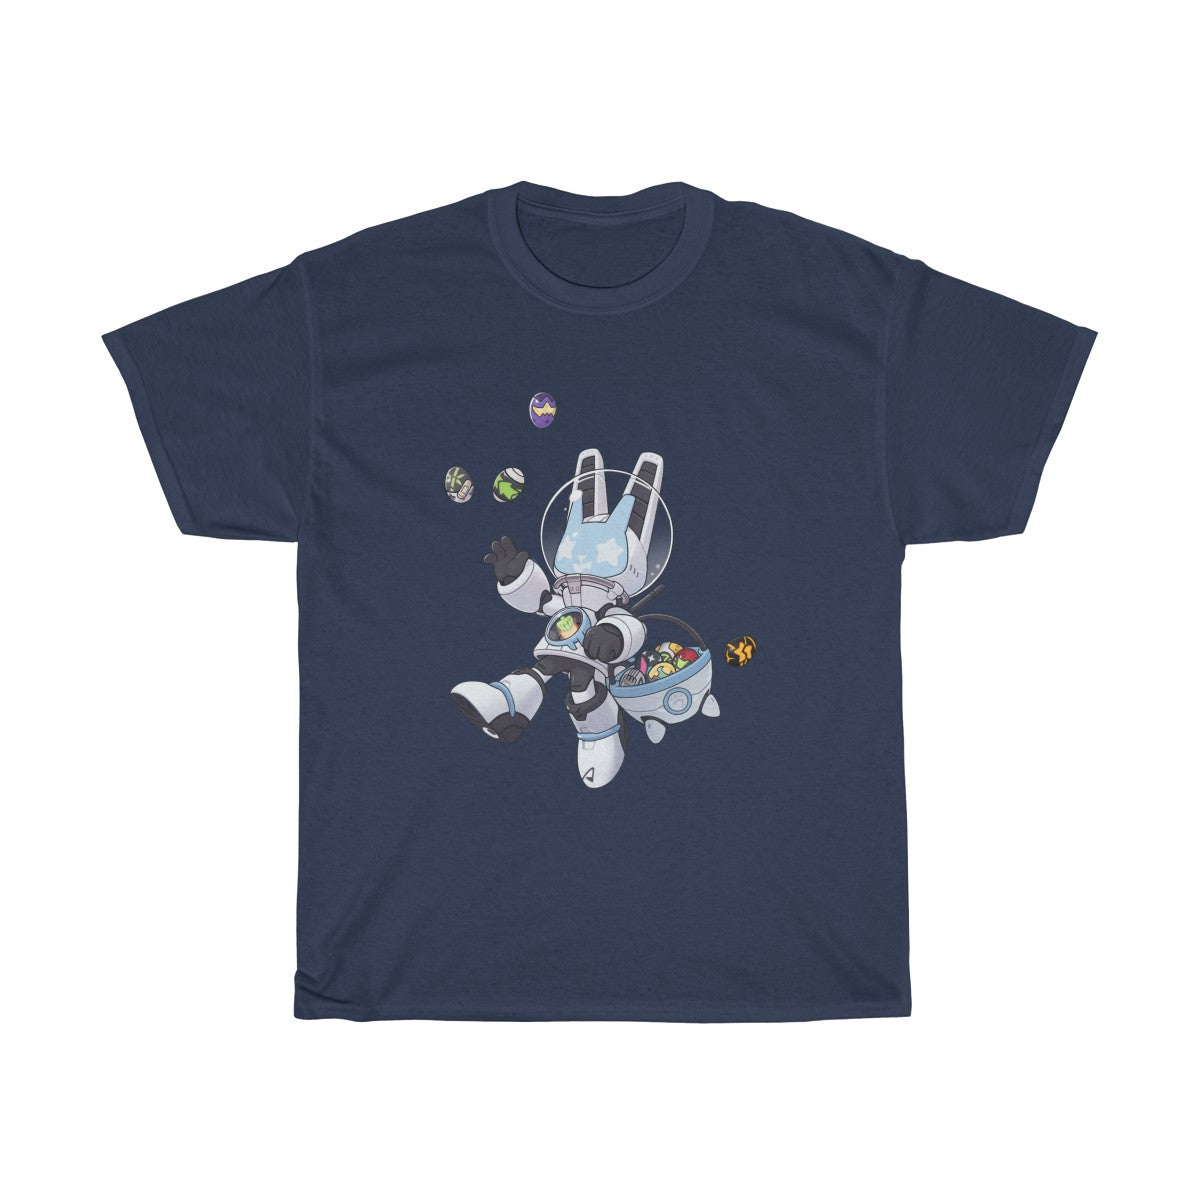 Easter Ace - T-Shirt T-Shirt Lordyan Navy Blue S 